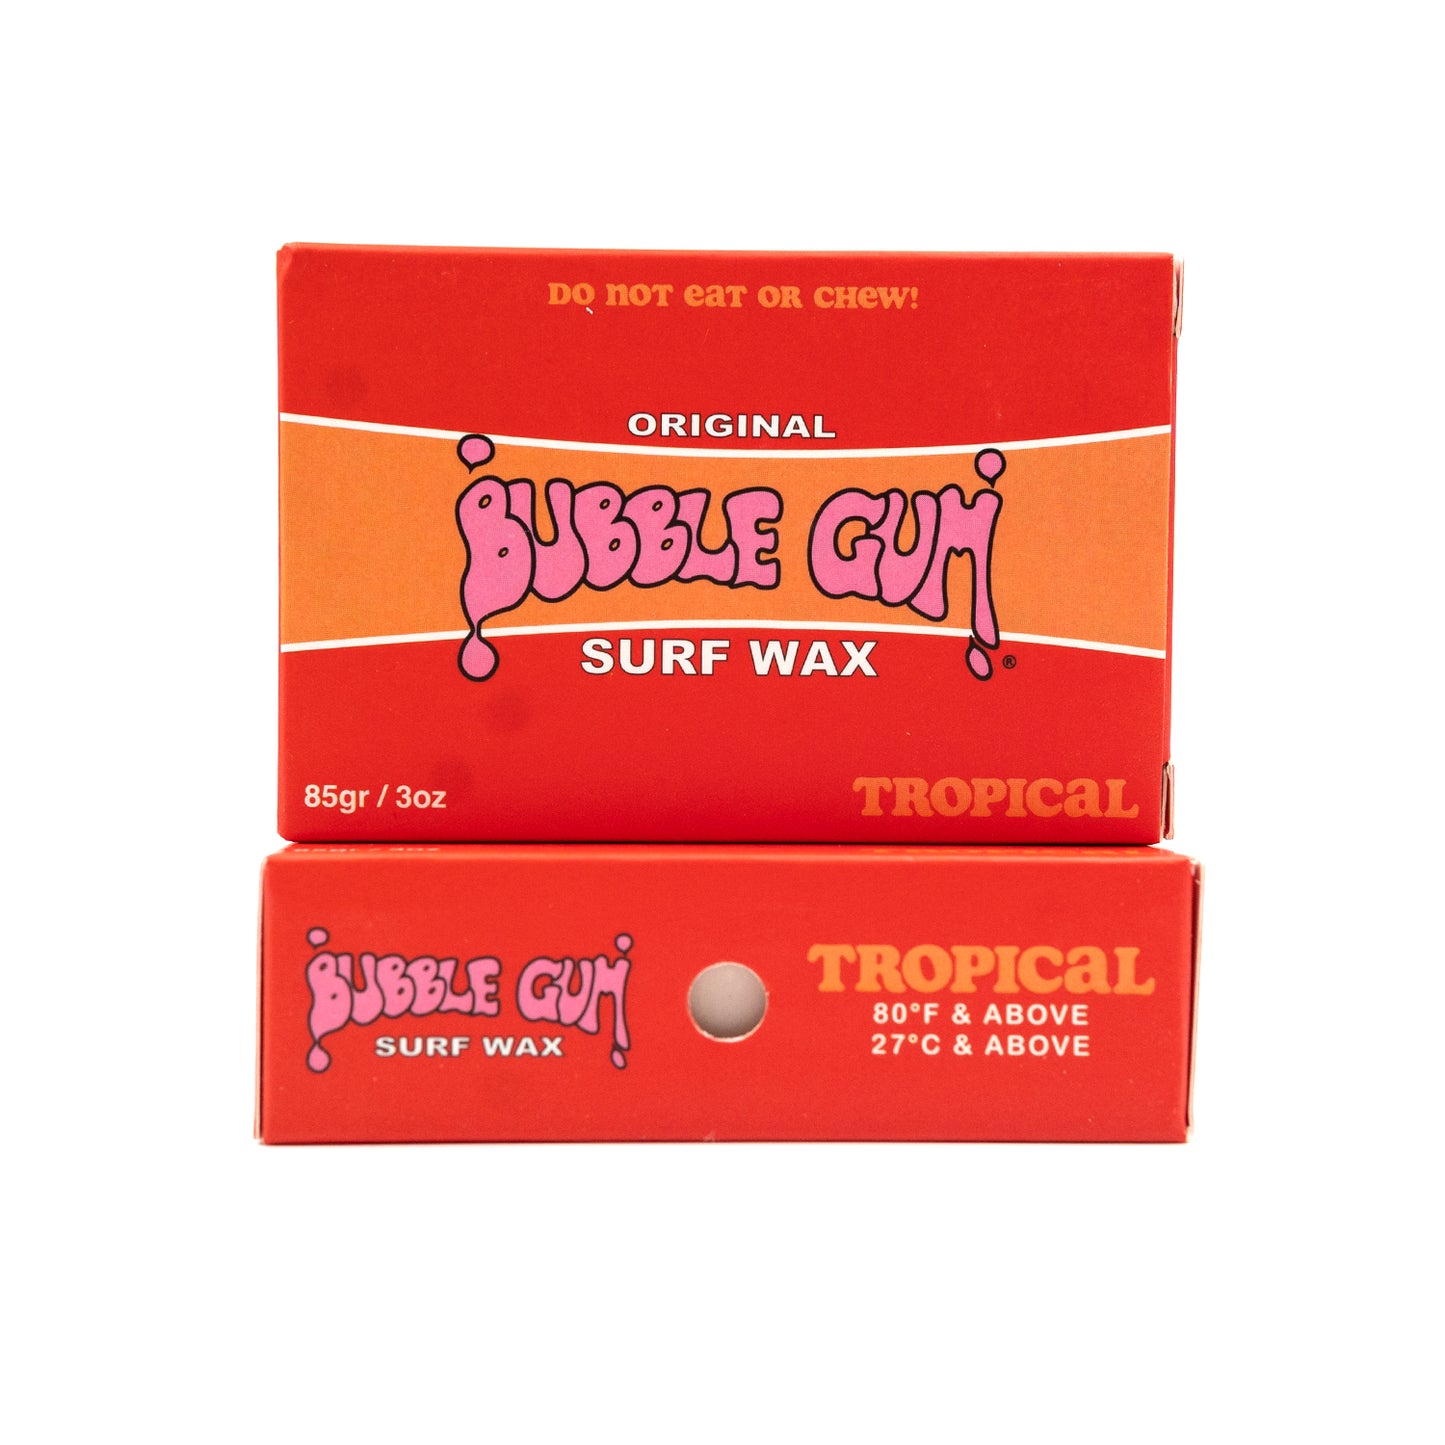 Bubble Gum "Original Formula" Surf Wax Box - Tropical - 80° & Above - 6 Pack